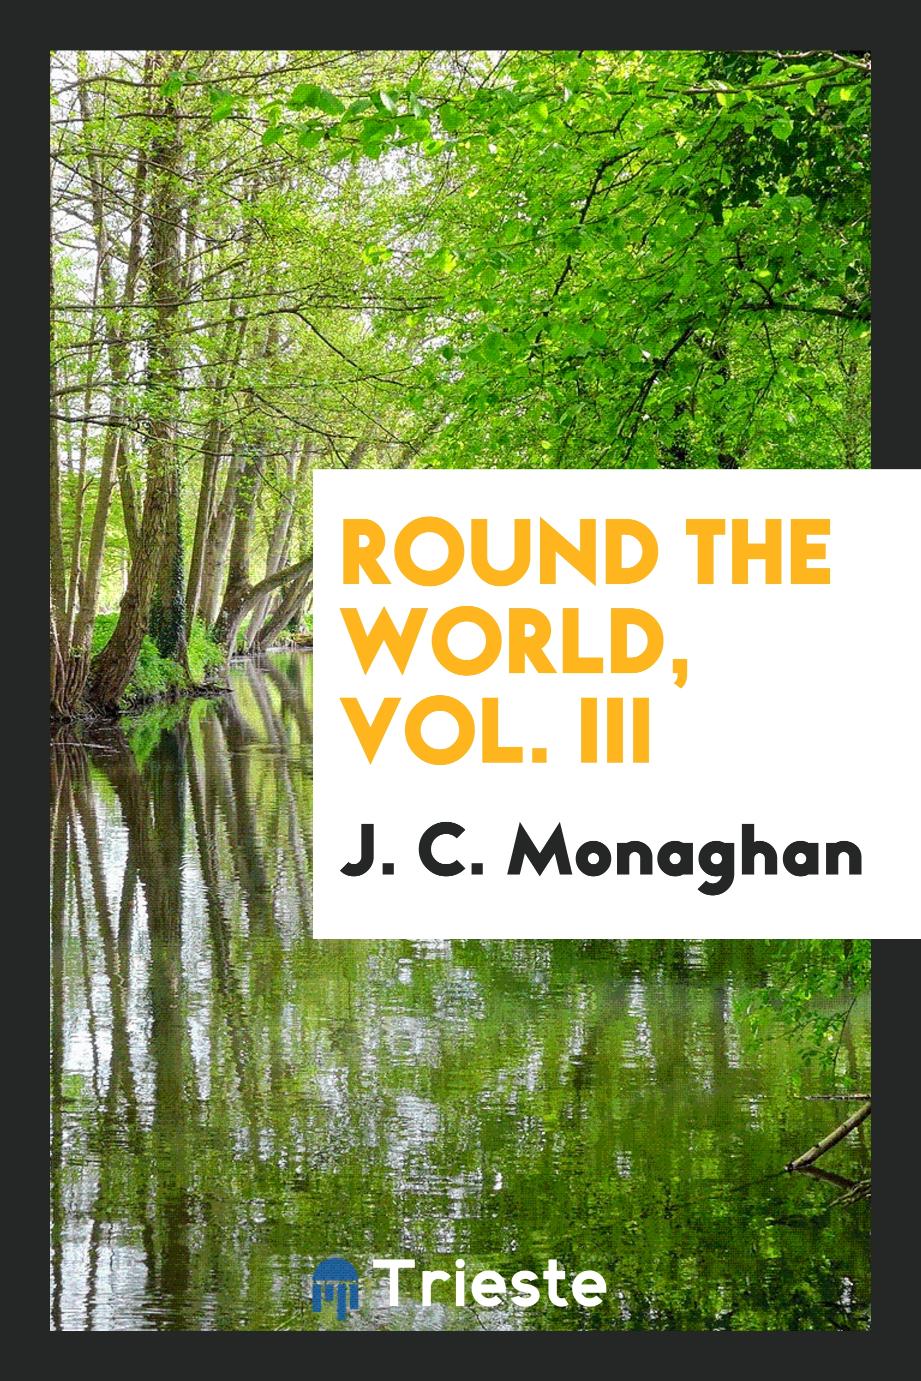 Round the world, Vol. III